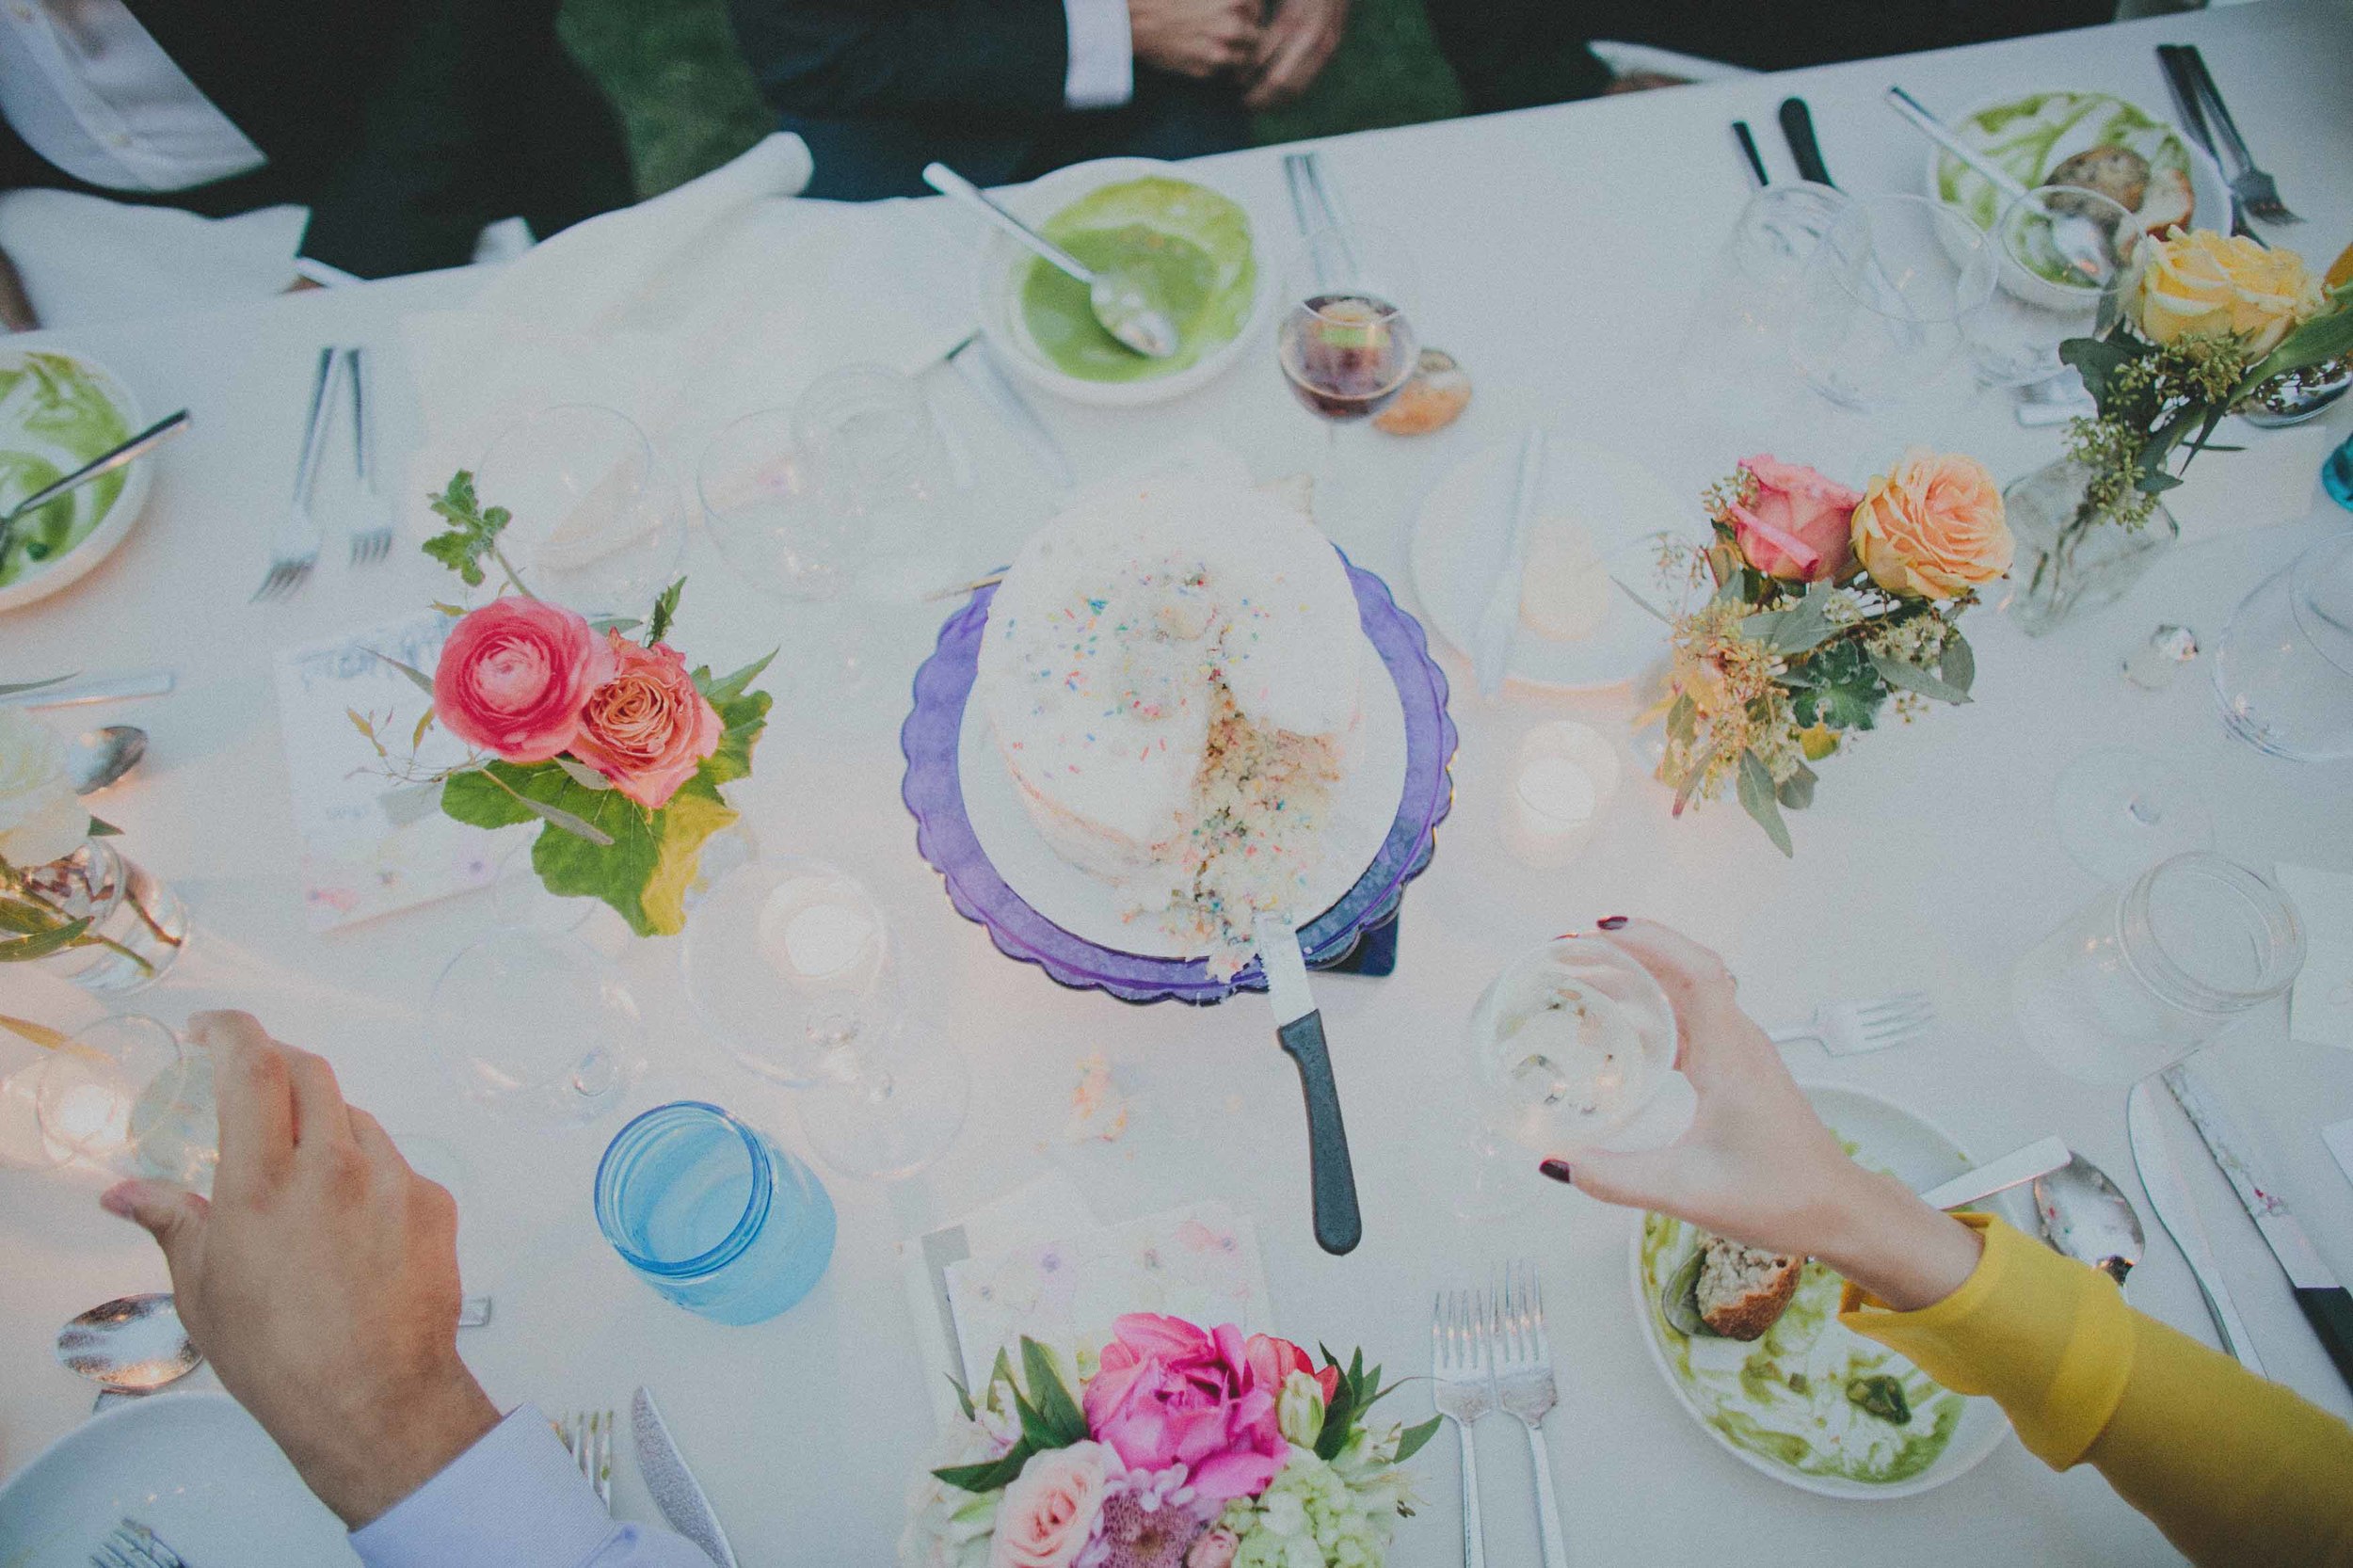 cake-centerpiece-table-number-wedding-momofuku